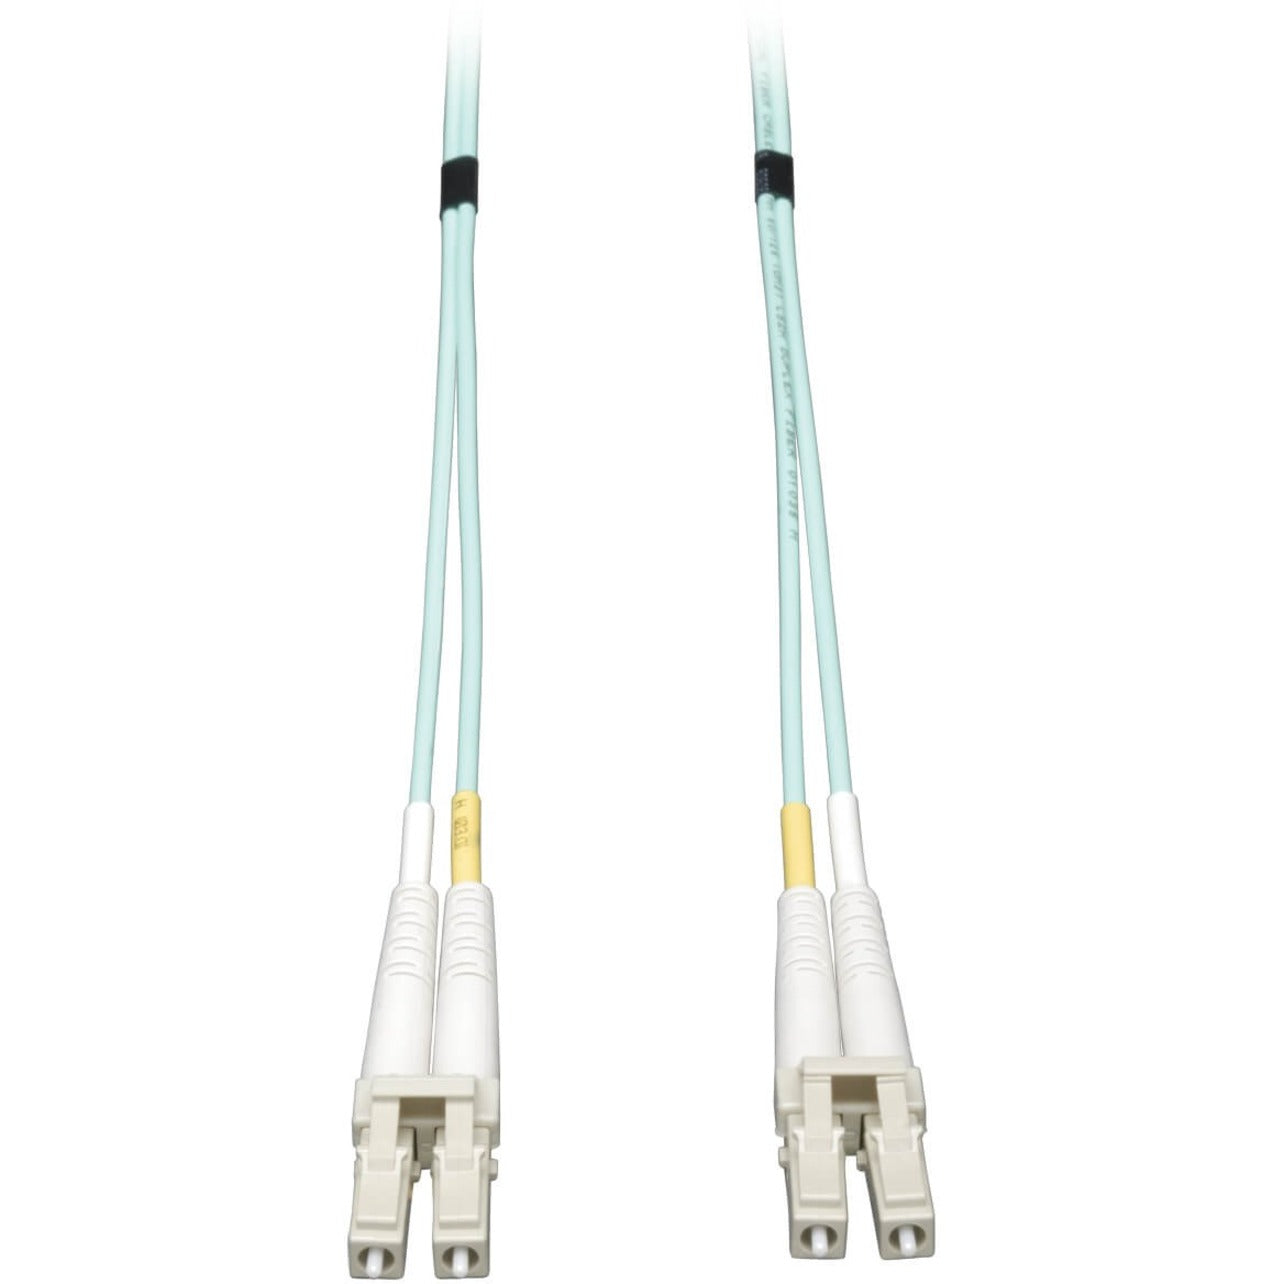 Tripp Lite N820-20M Aqua Duplex Fiber Patch Cable, 65.60 ft, 10gb Ethernet Speed to 300 Meters